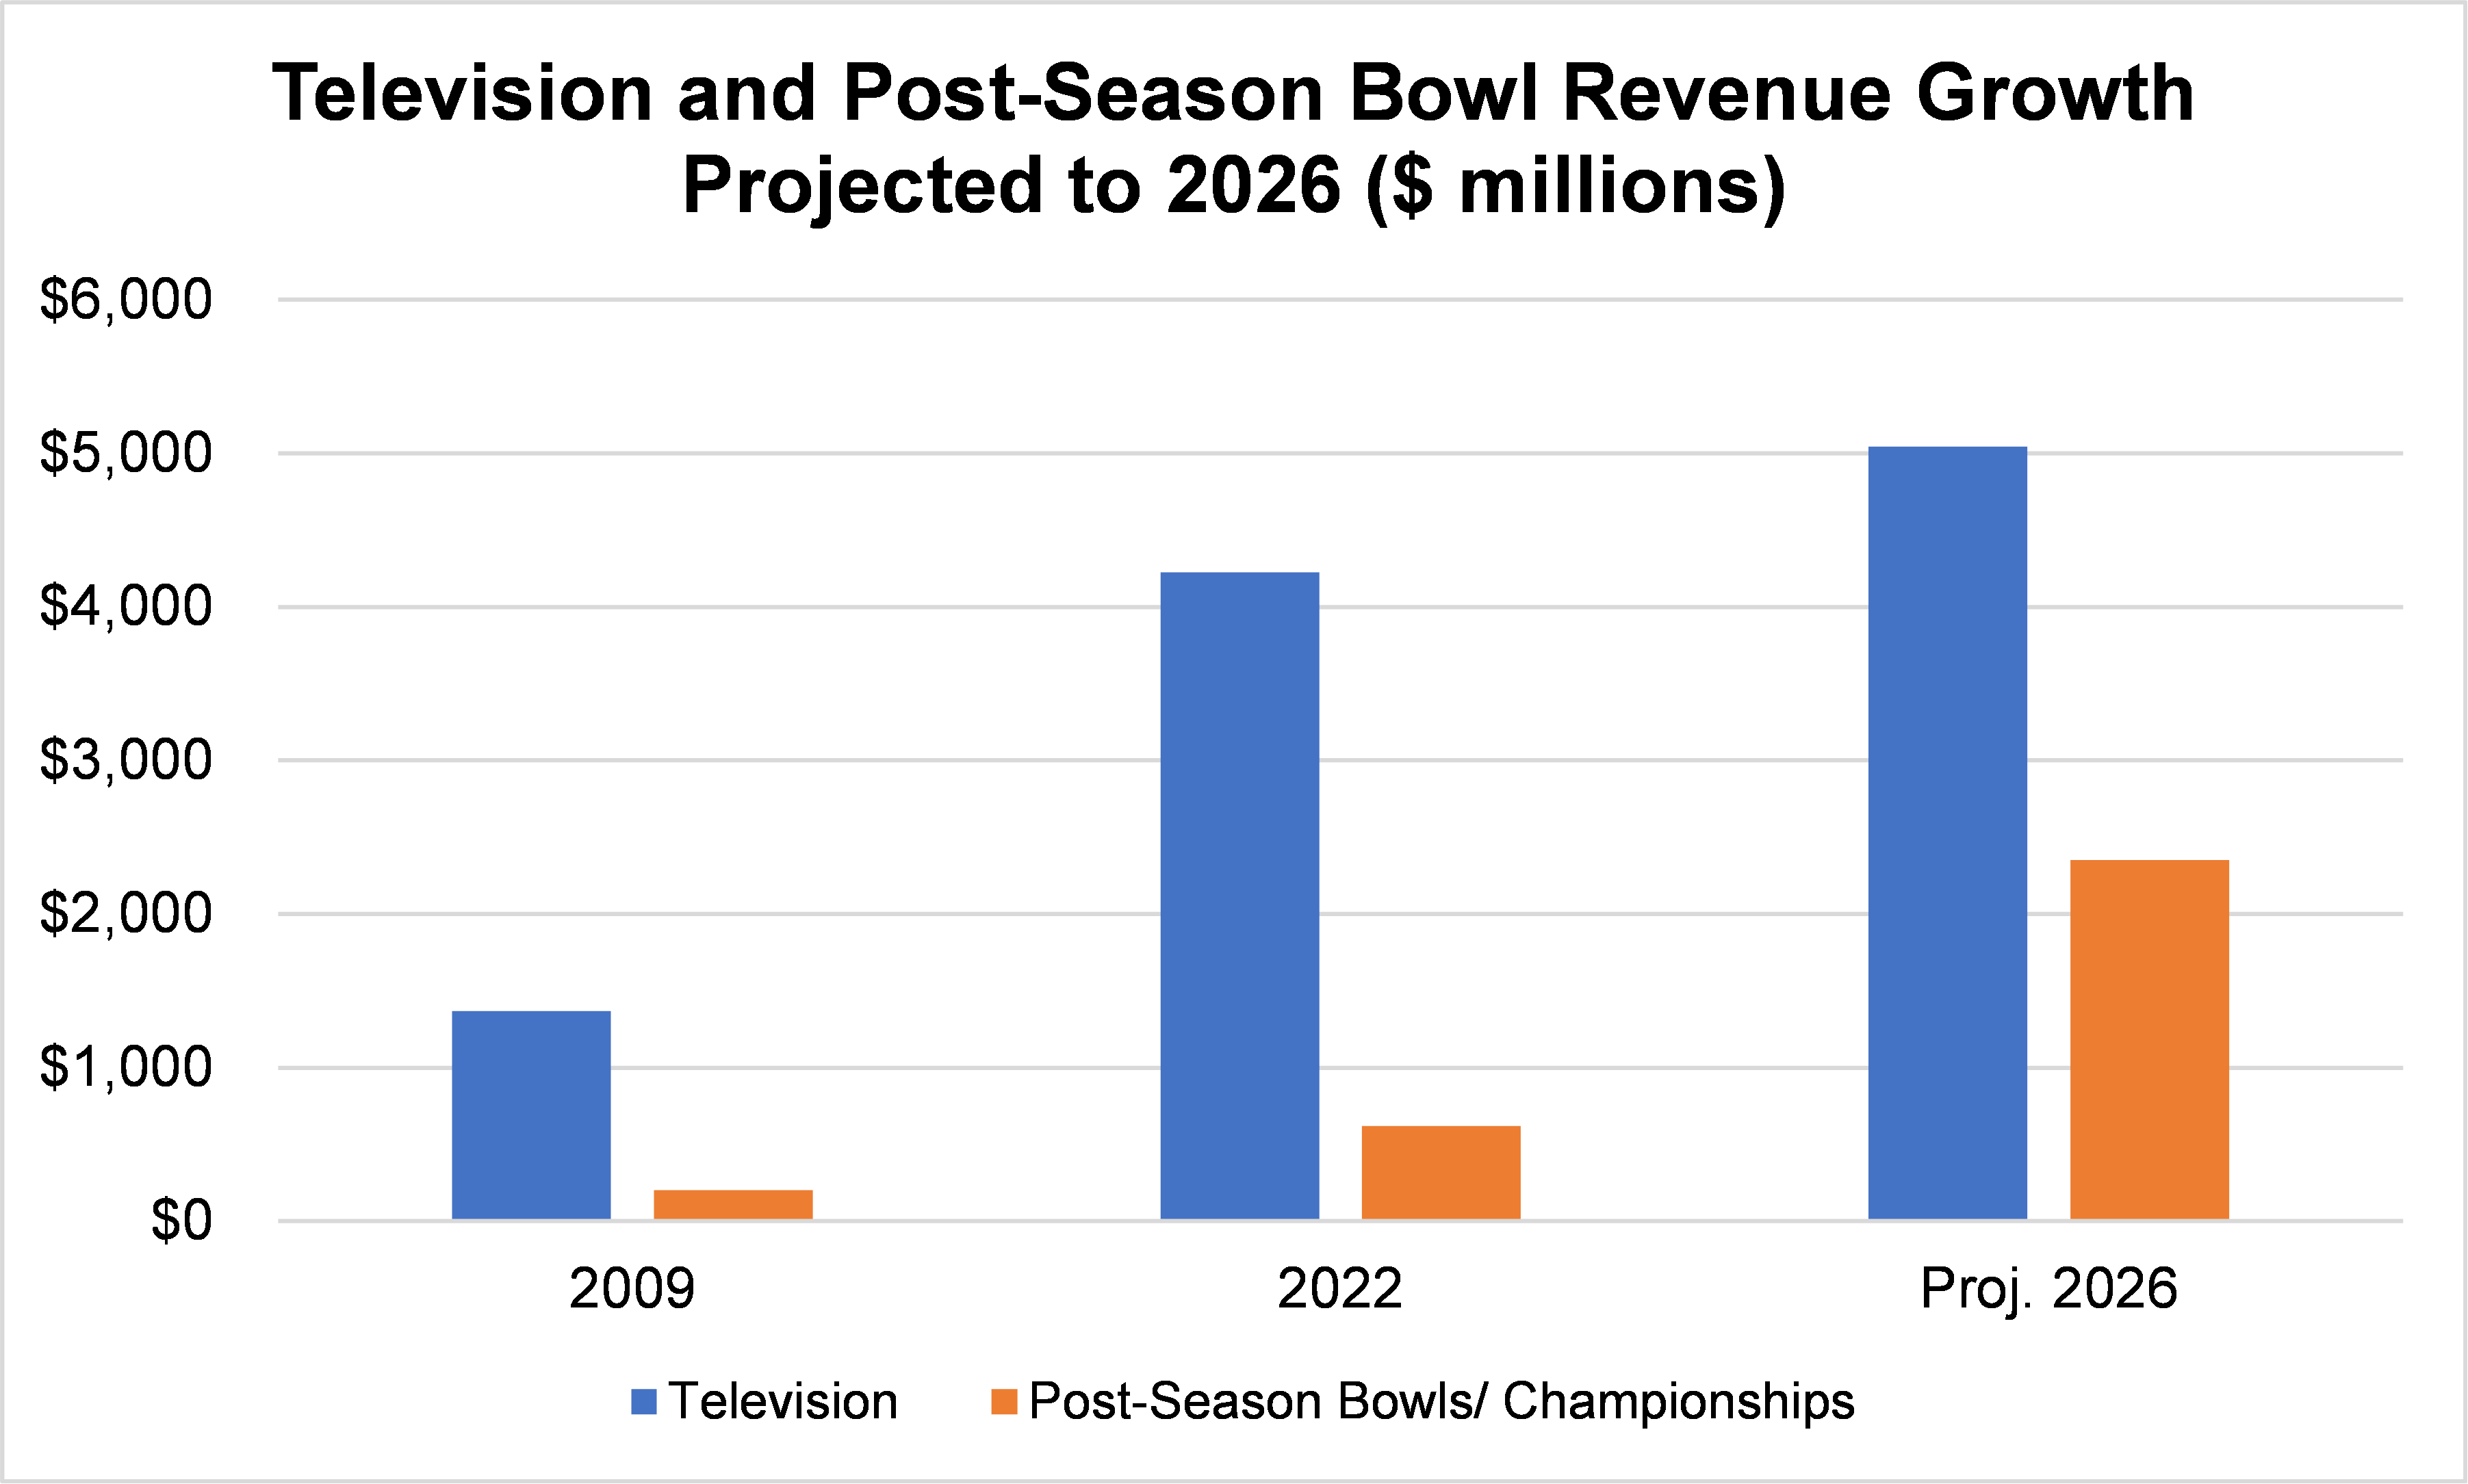 TV Bowl Revenue Growth Through 2026